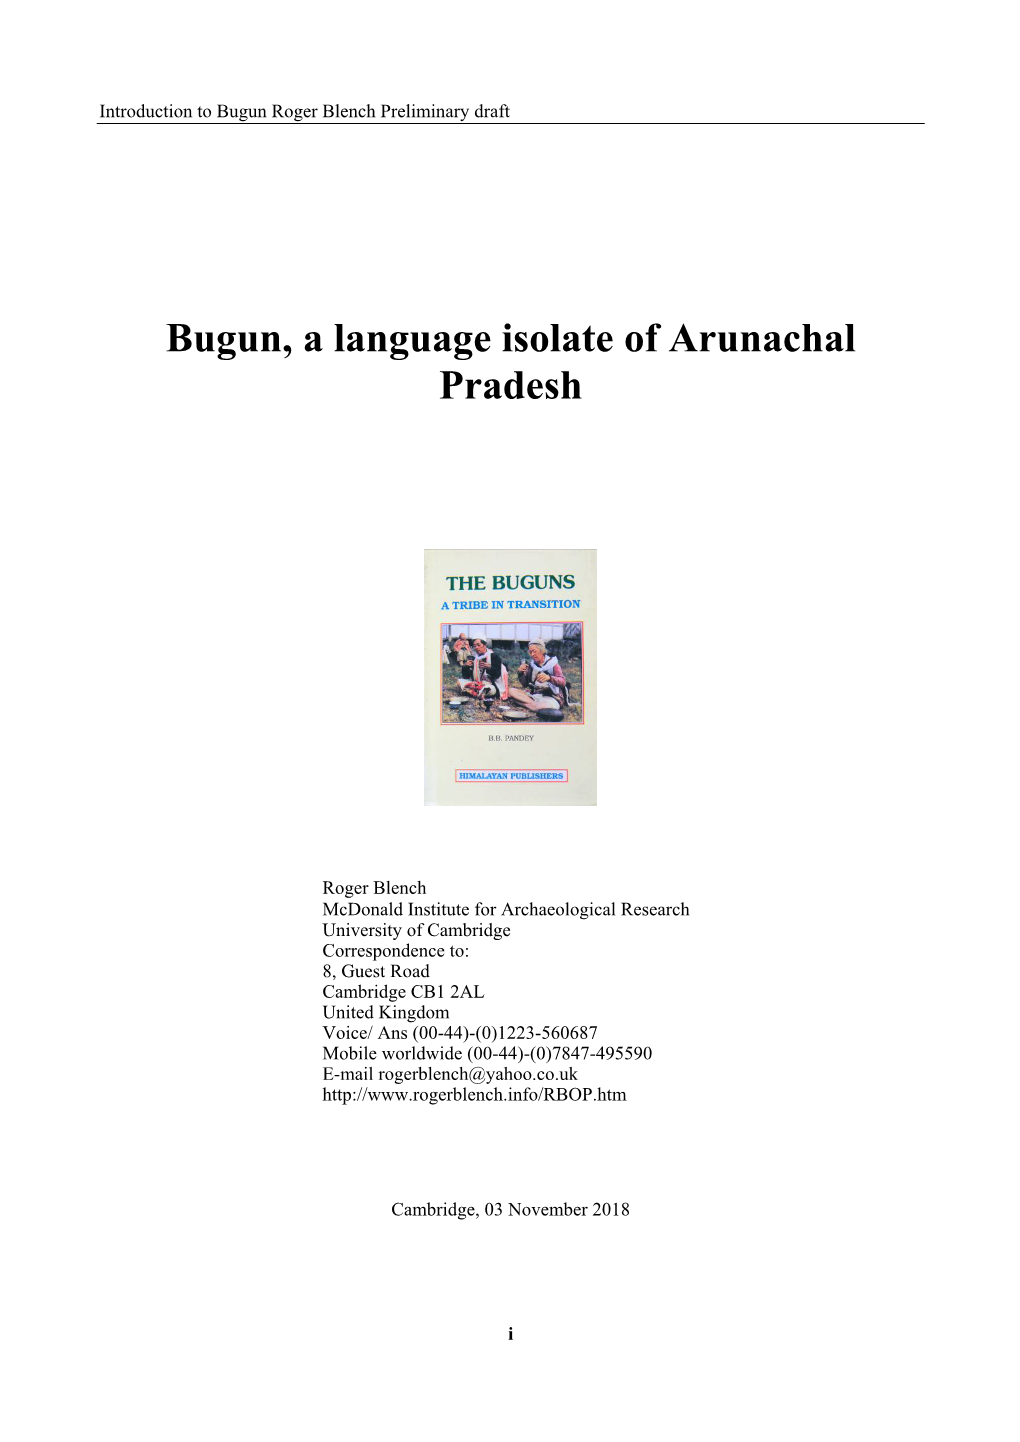 Bugun, a Language Isolate of Arunachal Pradesh